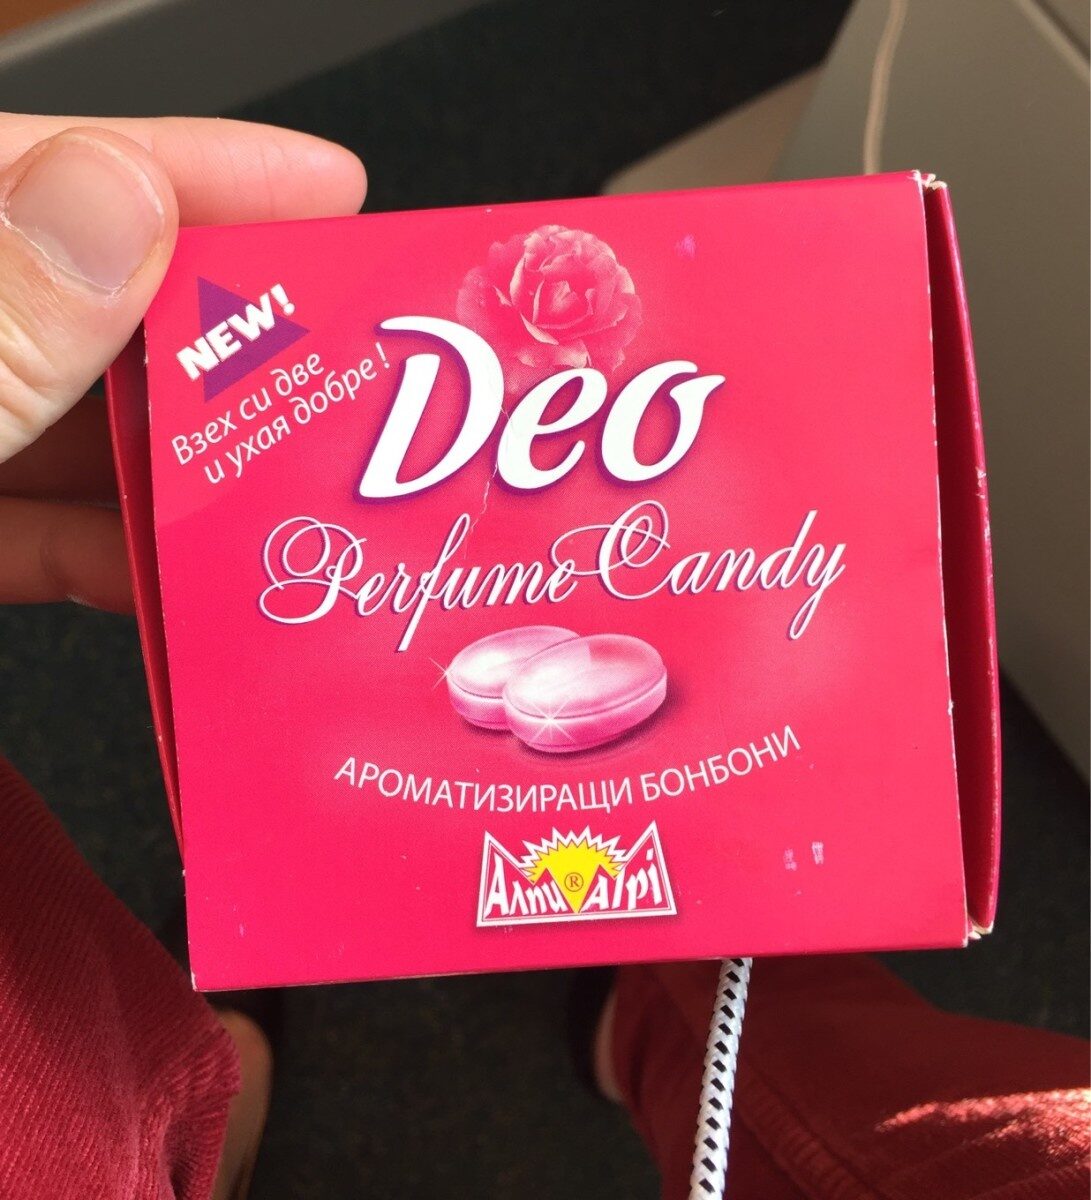 Deo perfume candy - Produit - fr